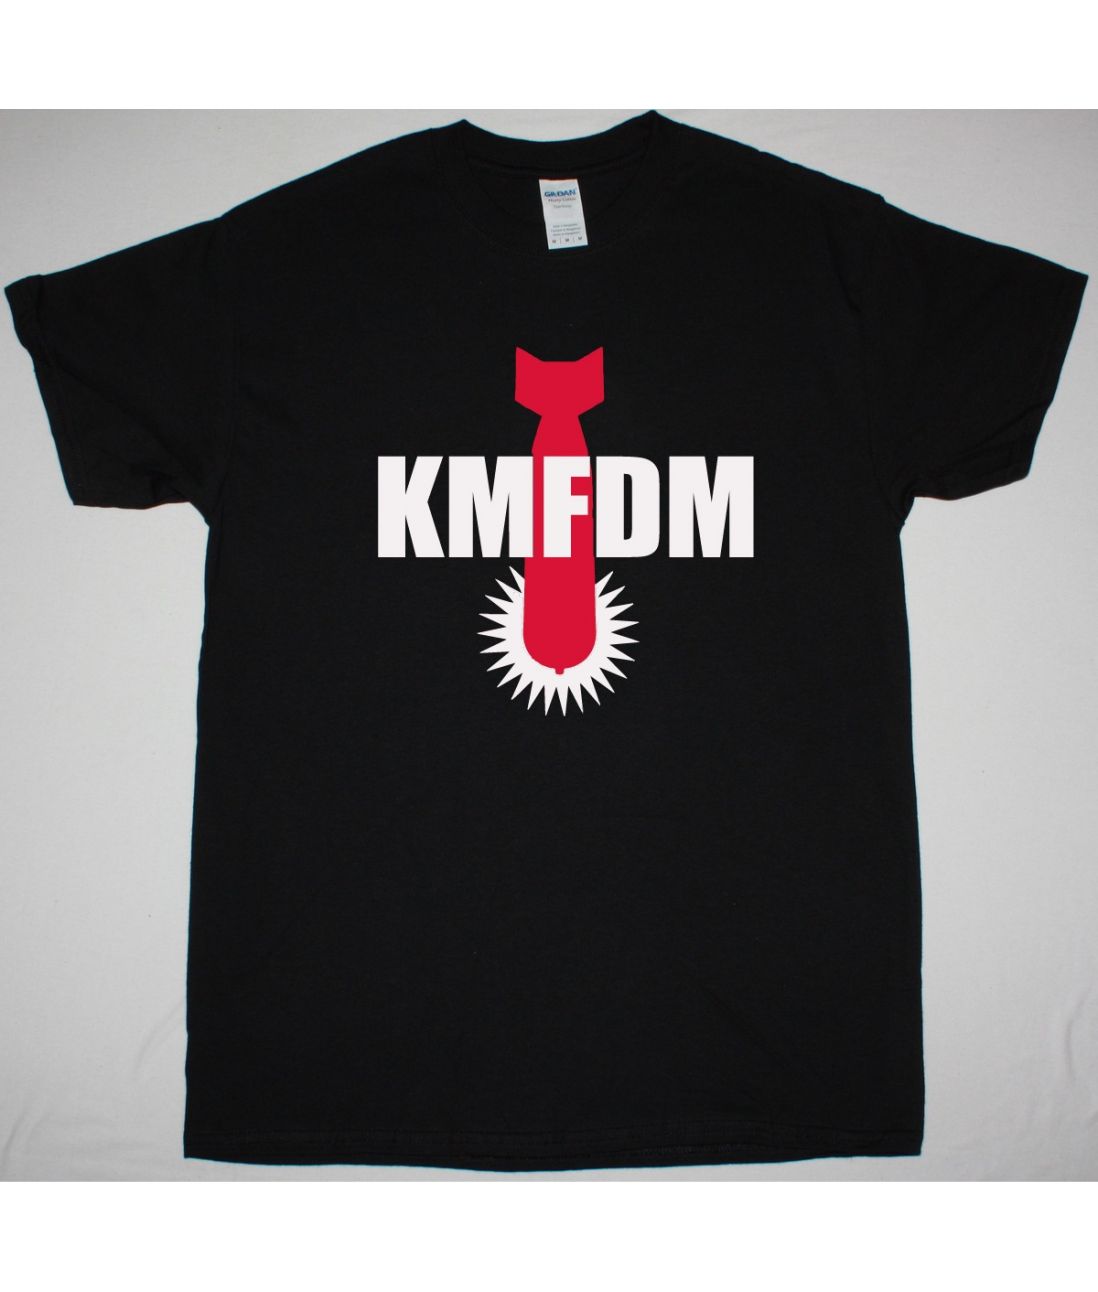 KMFDM LOGO TANKTOP Tee Black All Size 